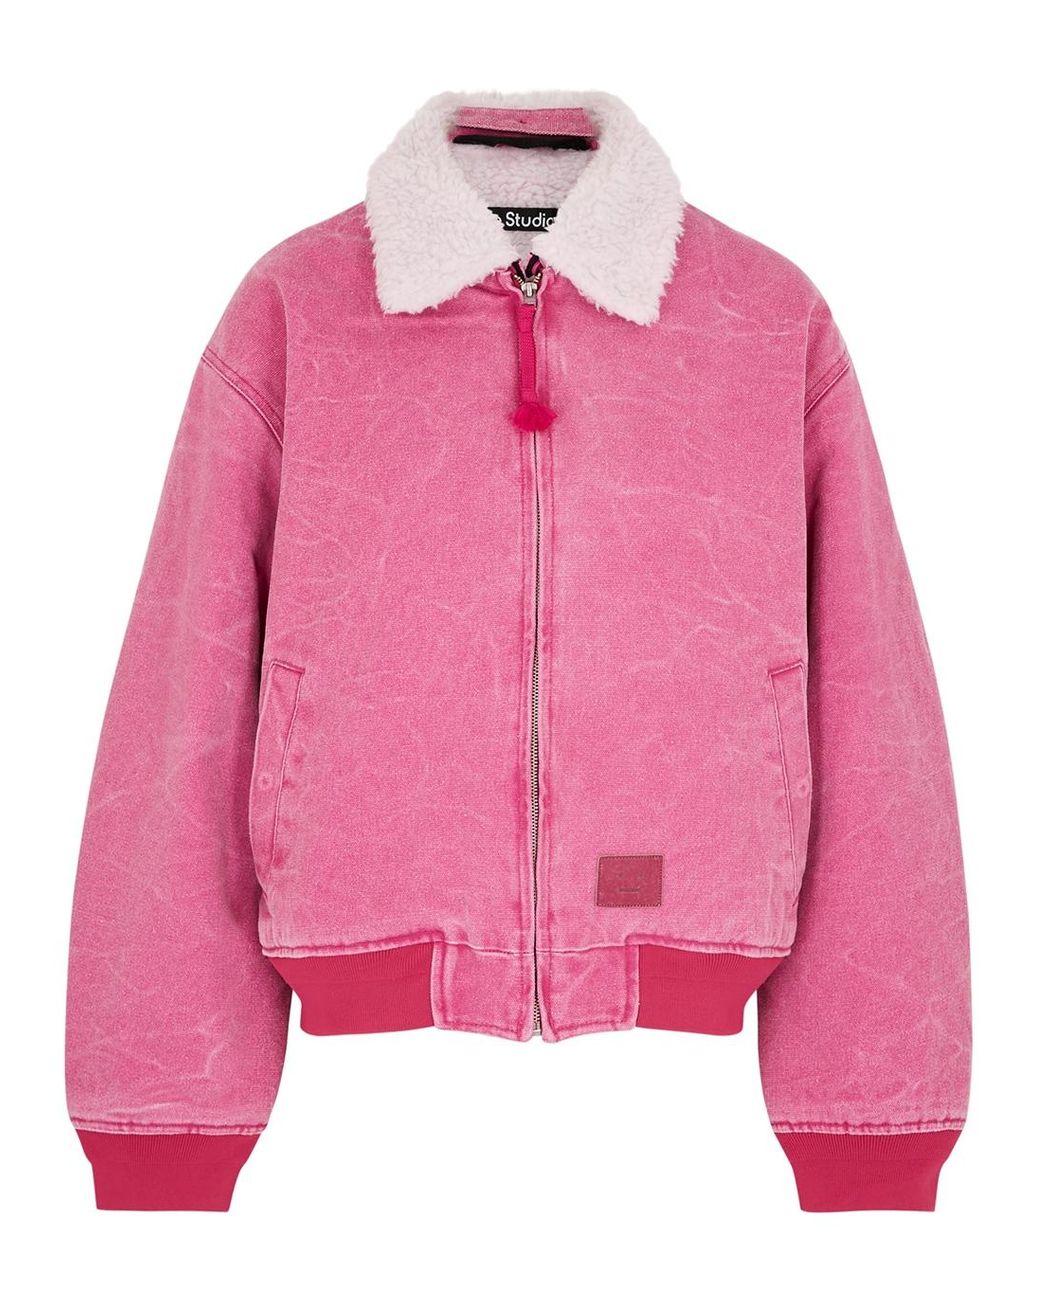 Acne Studios Faux Shearling-trimmed Denim Bomber Jacket in Pink | Lyst